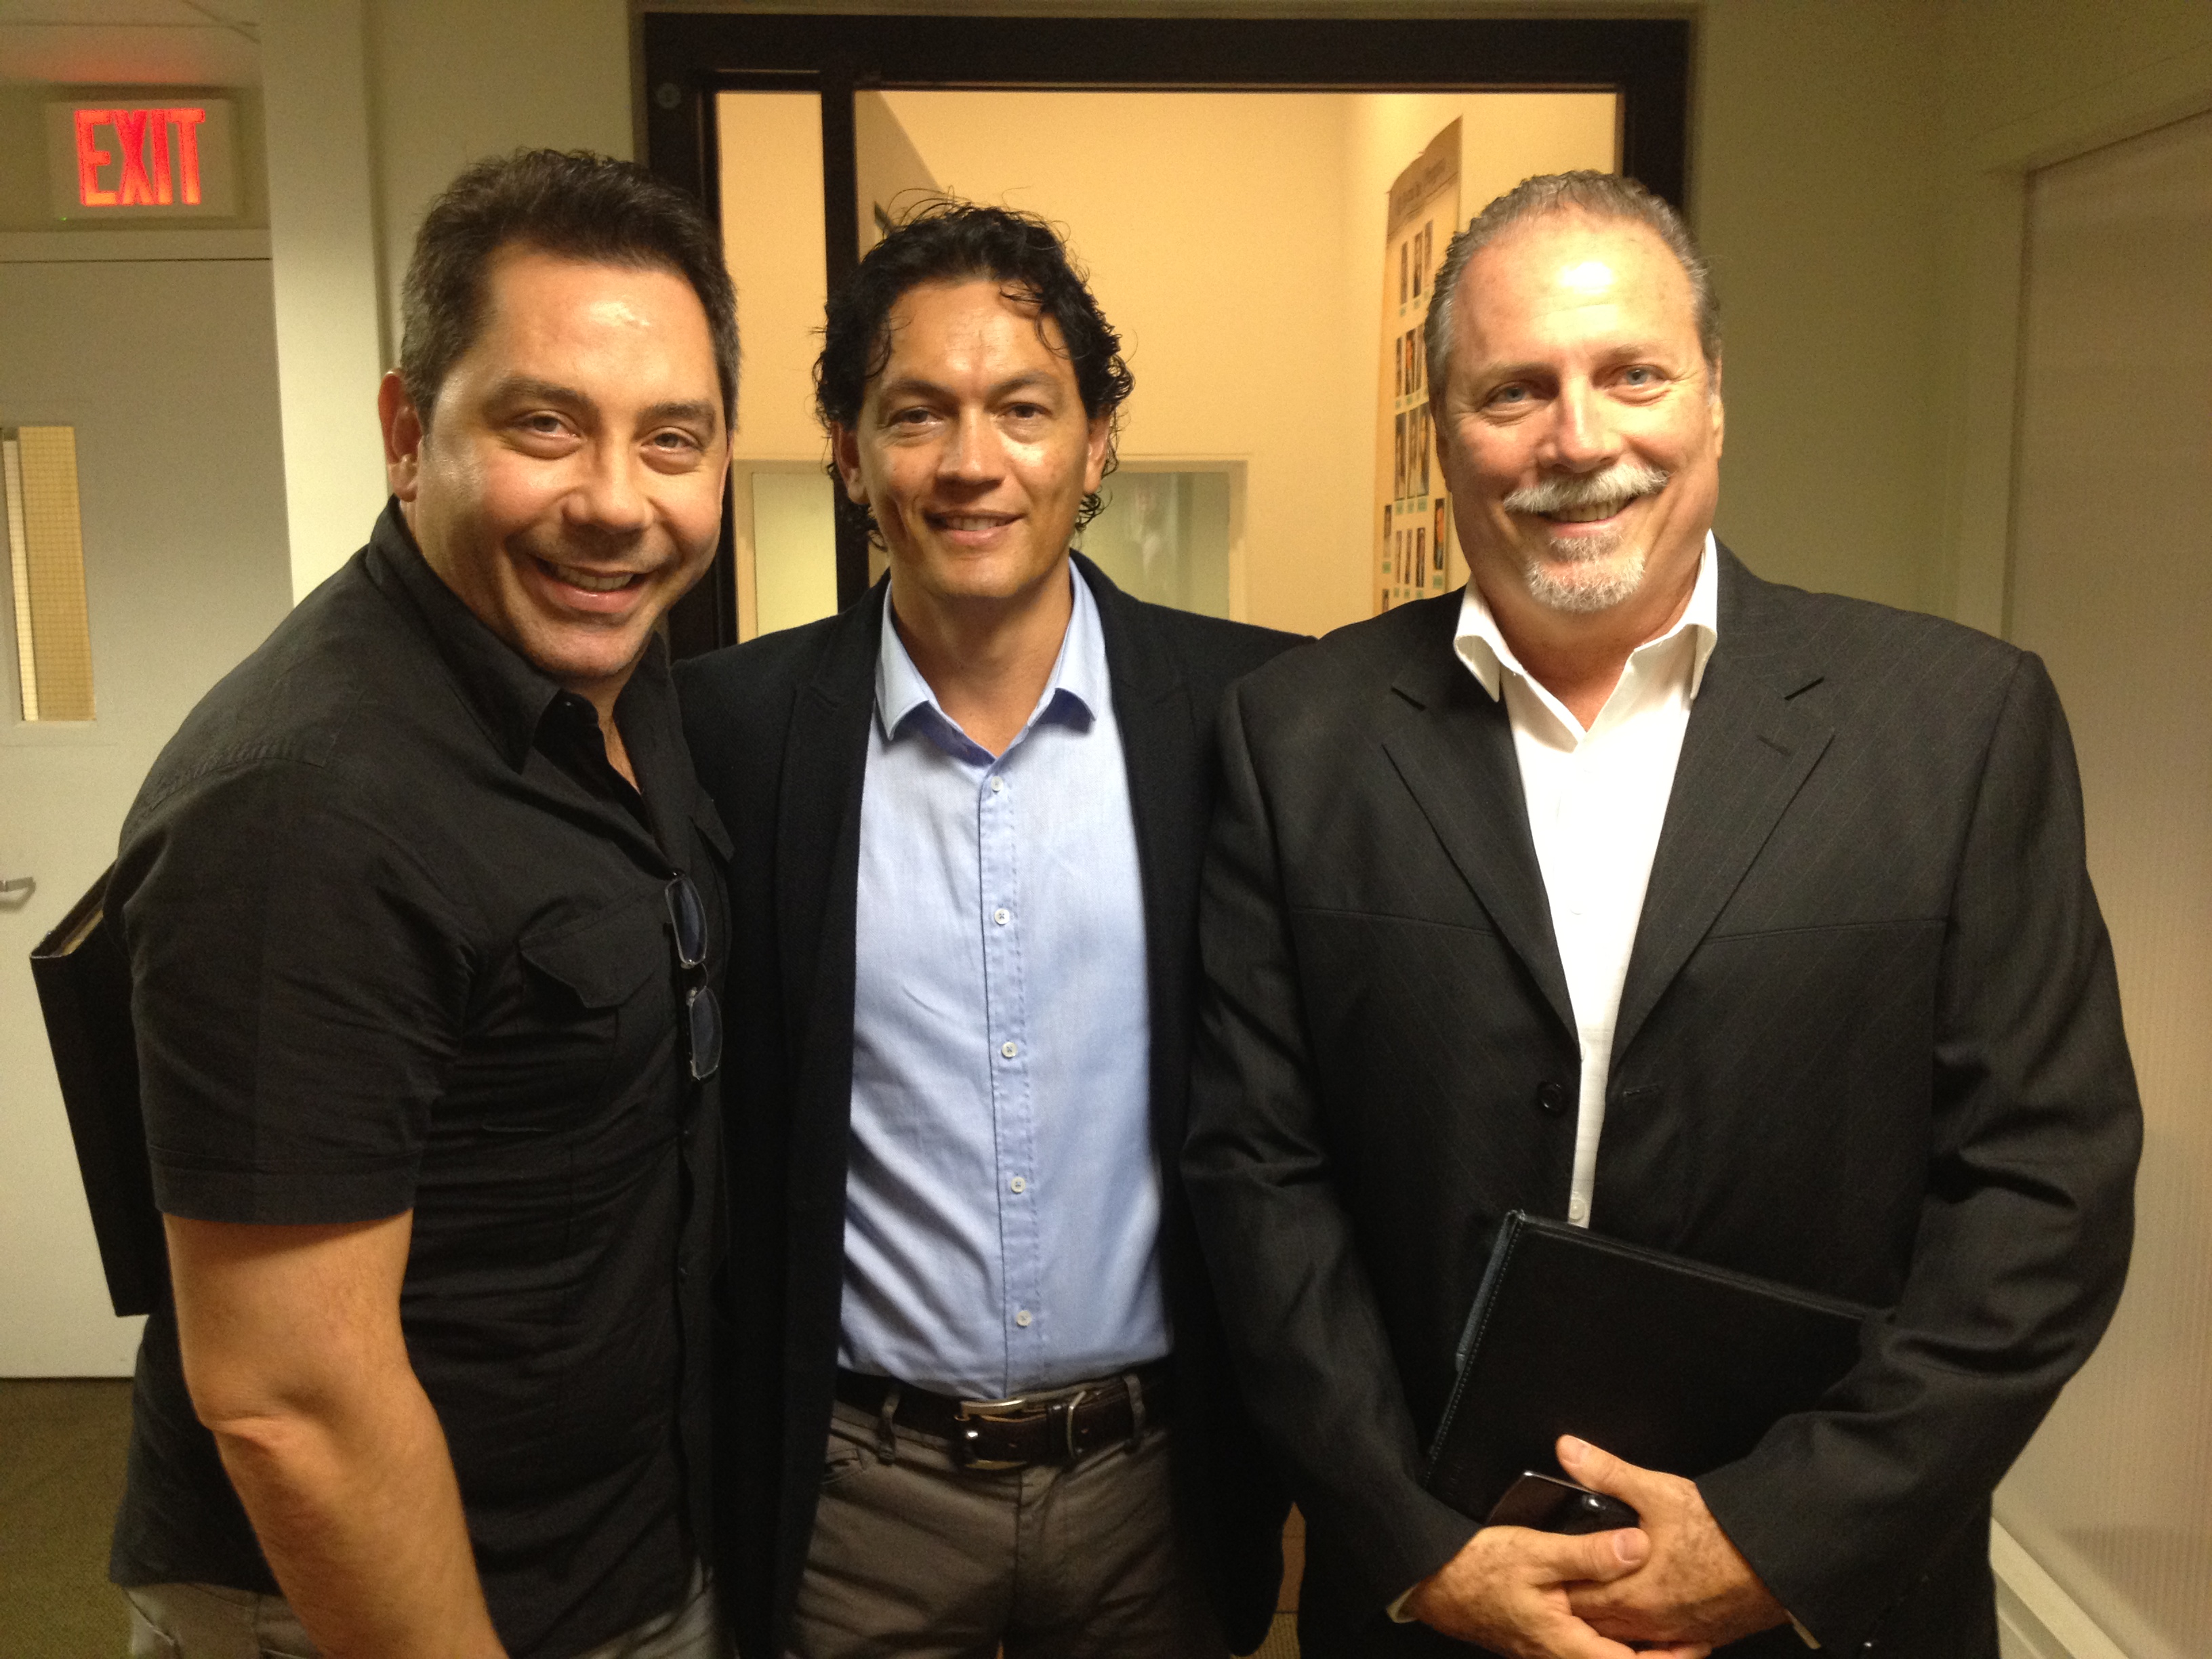 Roberto Stopello, Jorge Jimenez, and Luis Zelkowicz from 